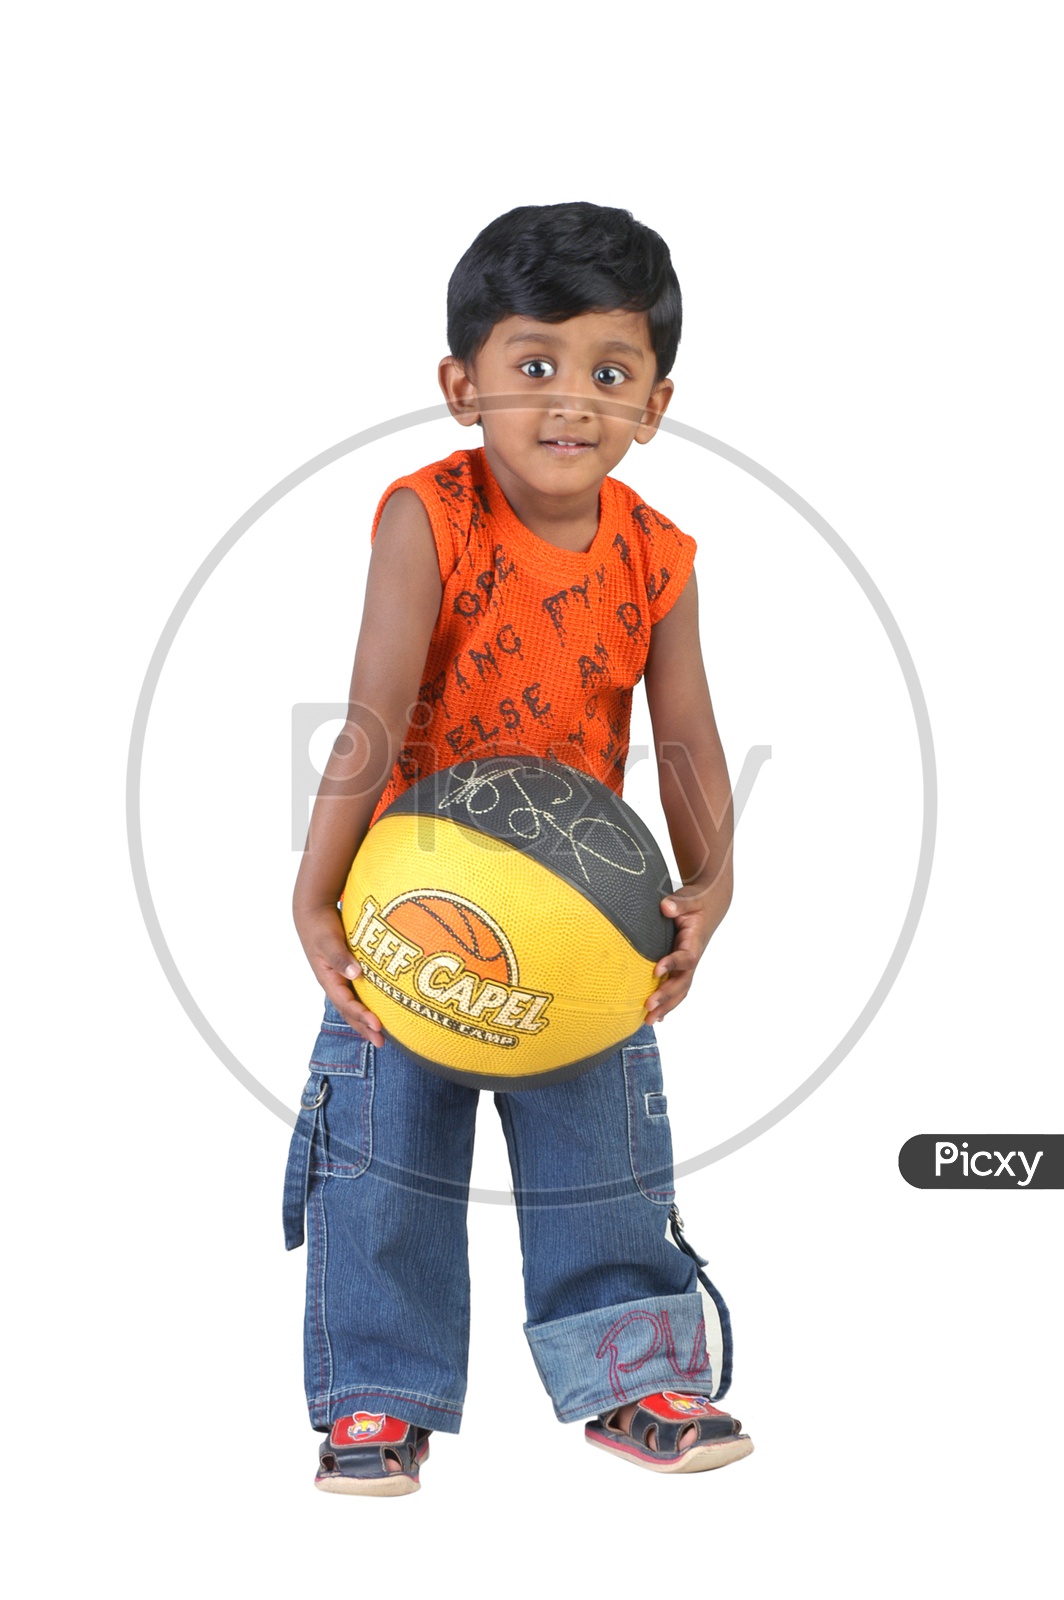 Indian boy holding a throw ball